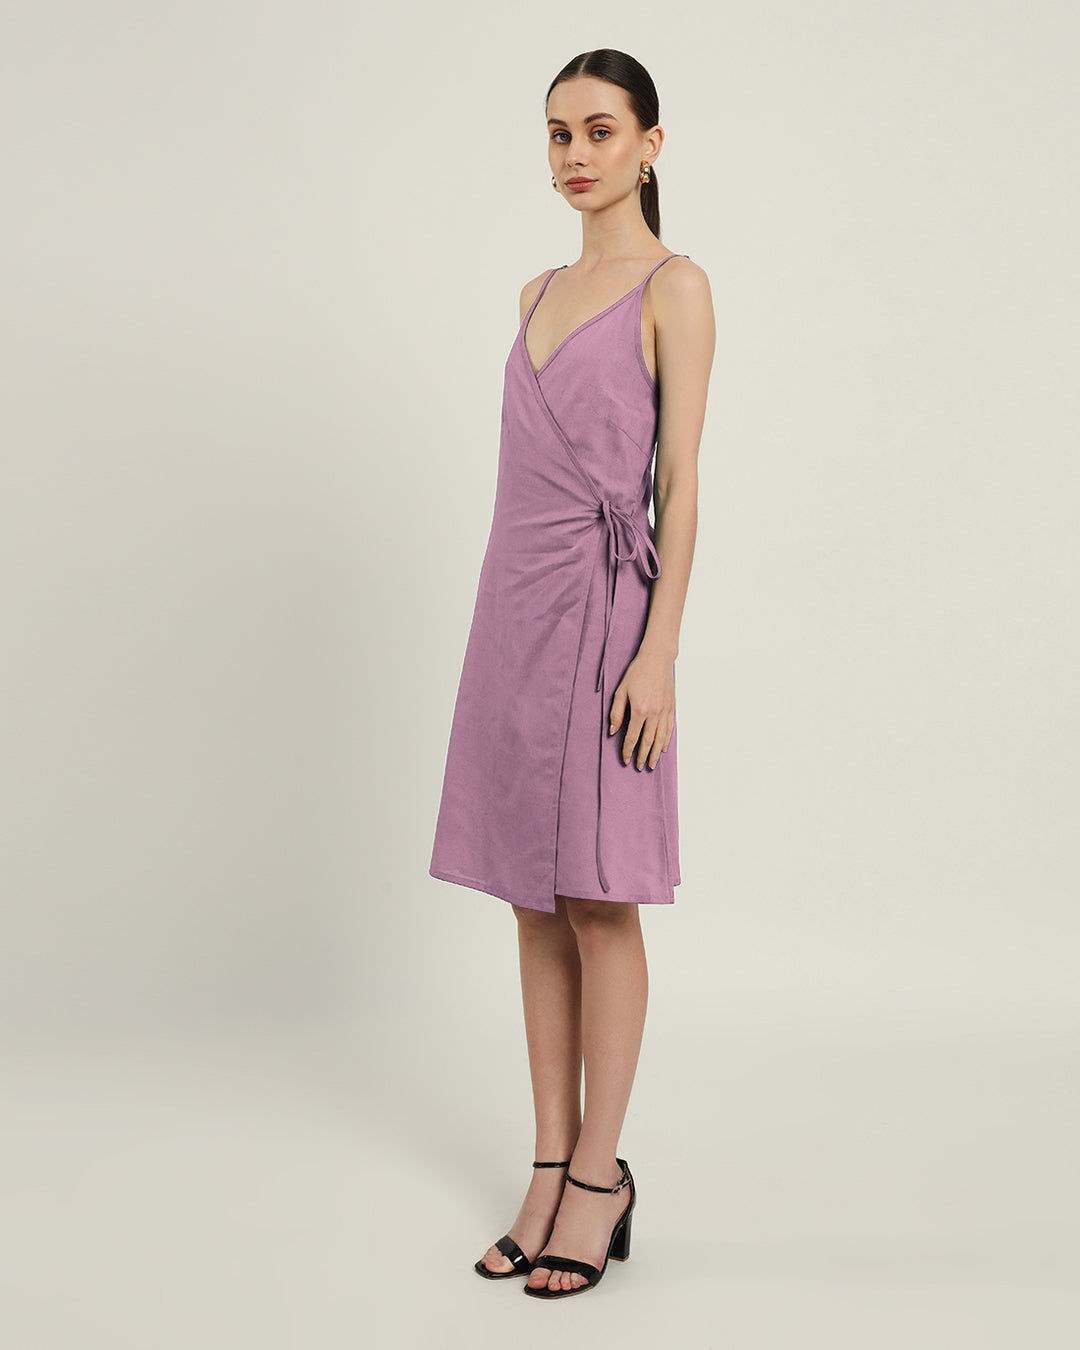 The Chambéry Purple Swirl Dress